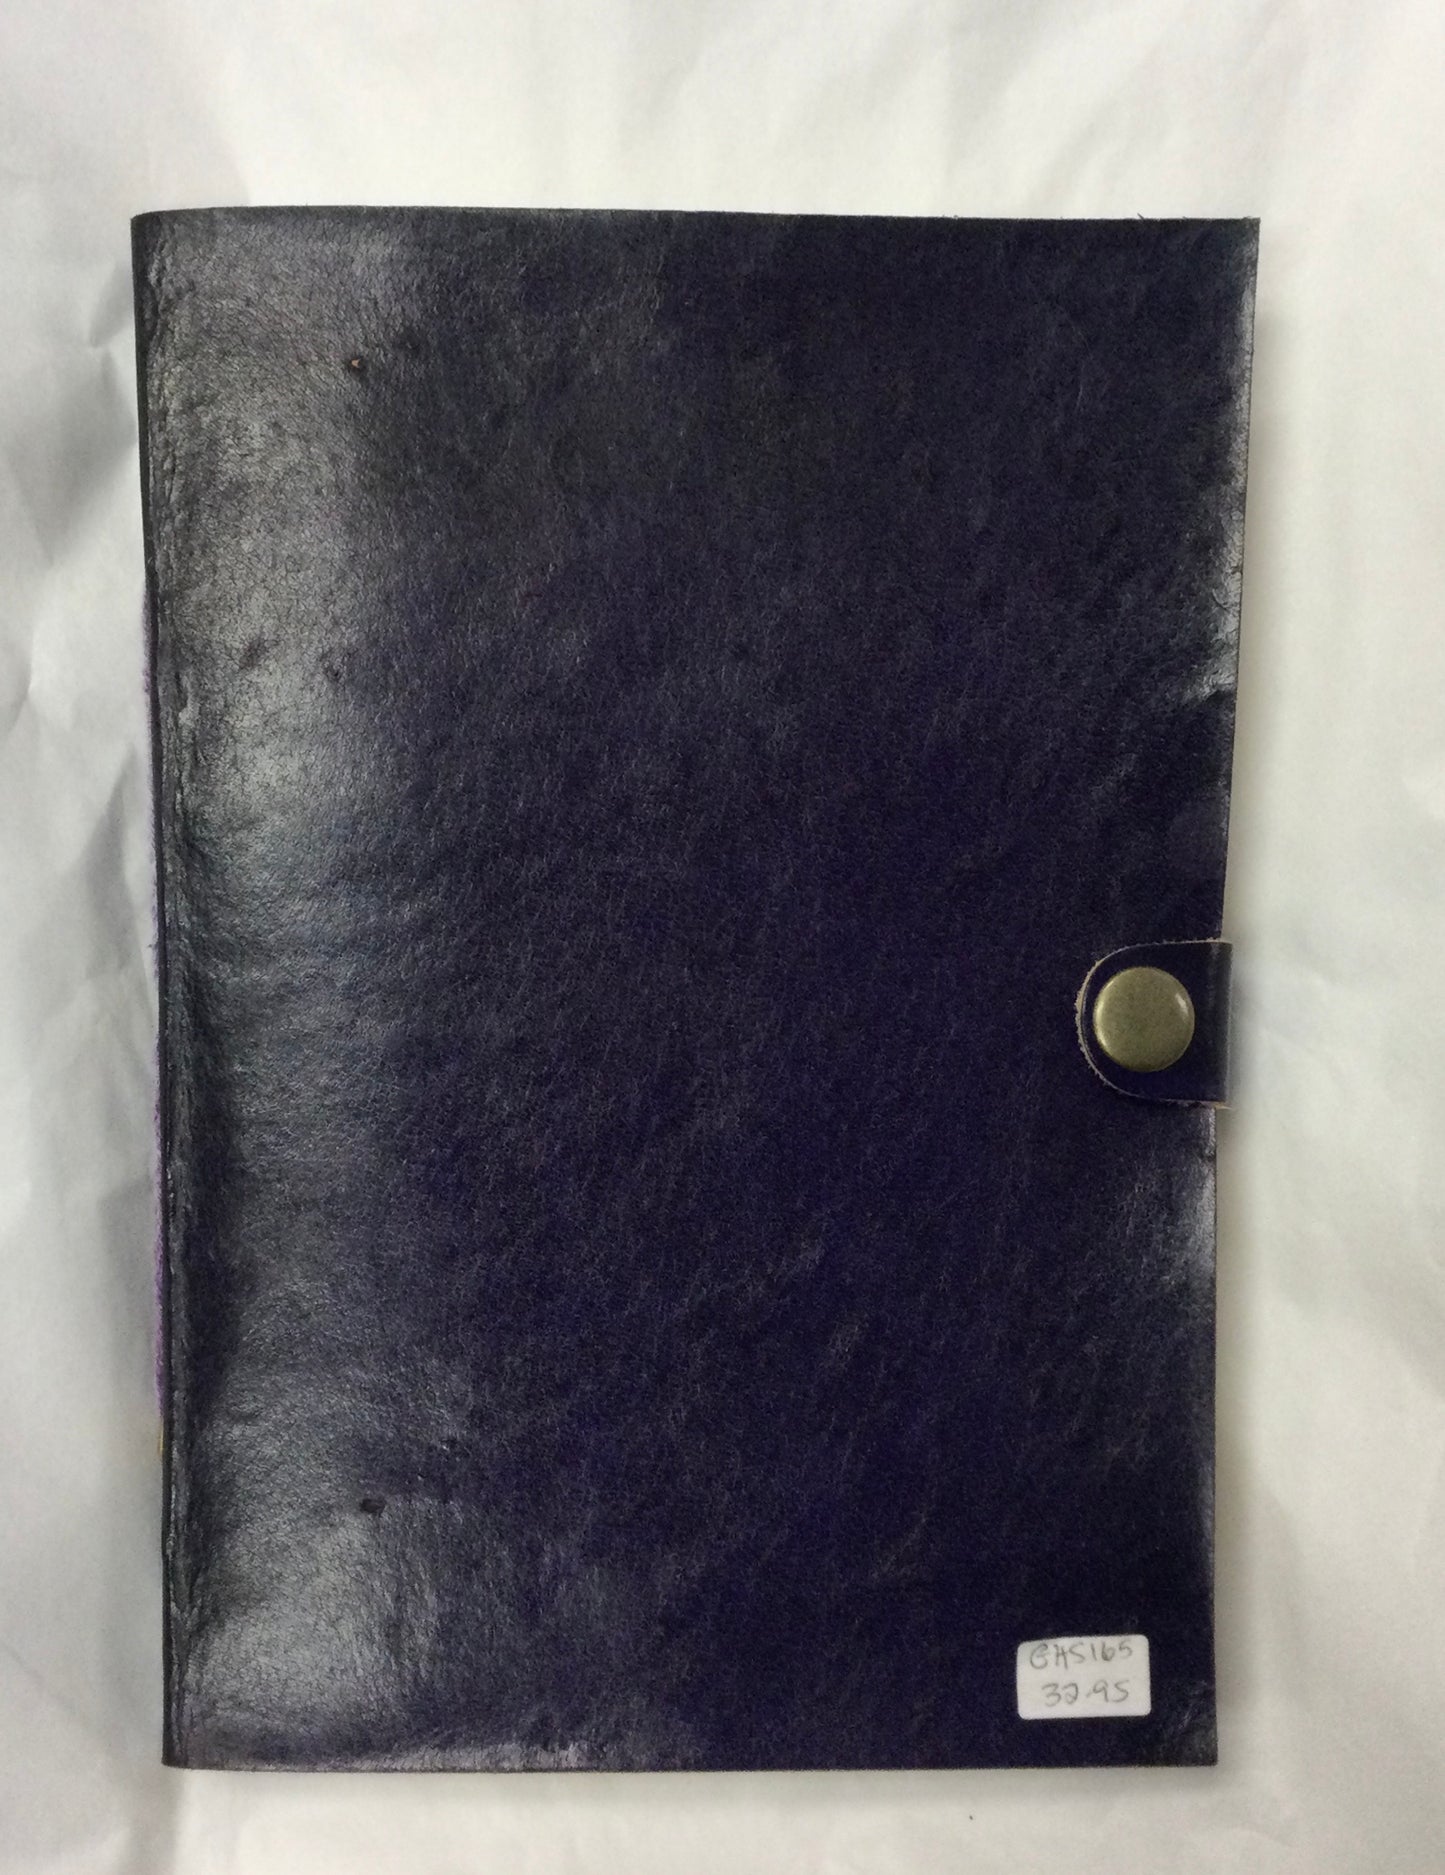 Coloured Leather Journal / Notebook, No Design, Single Fastener